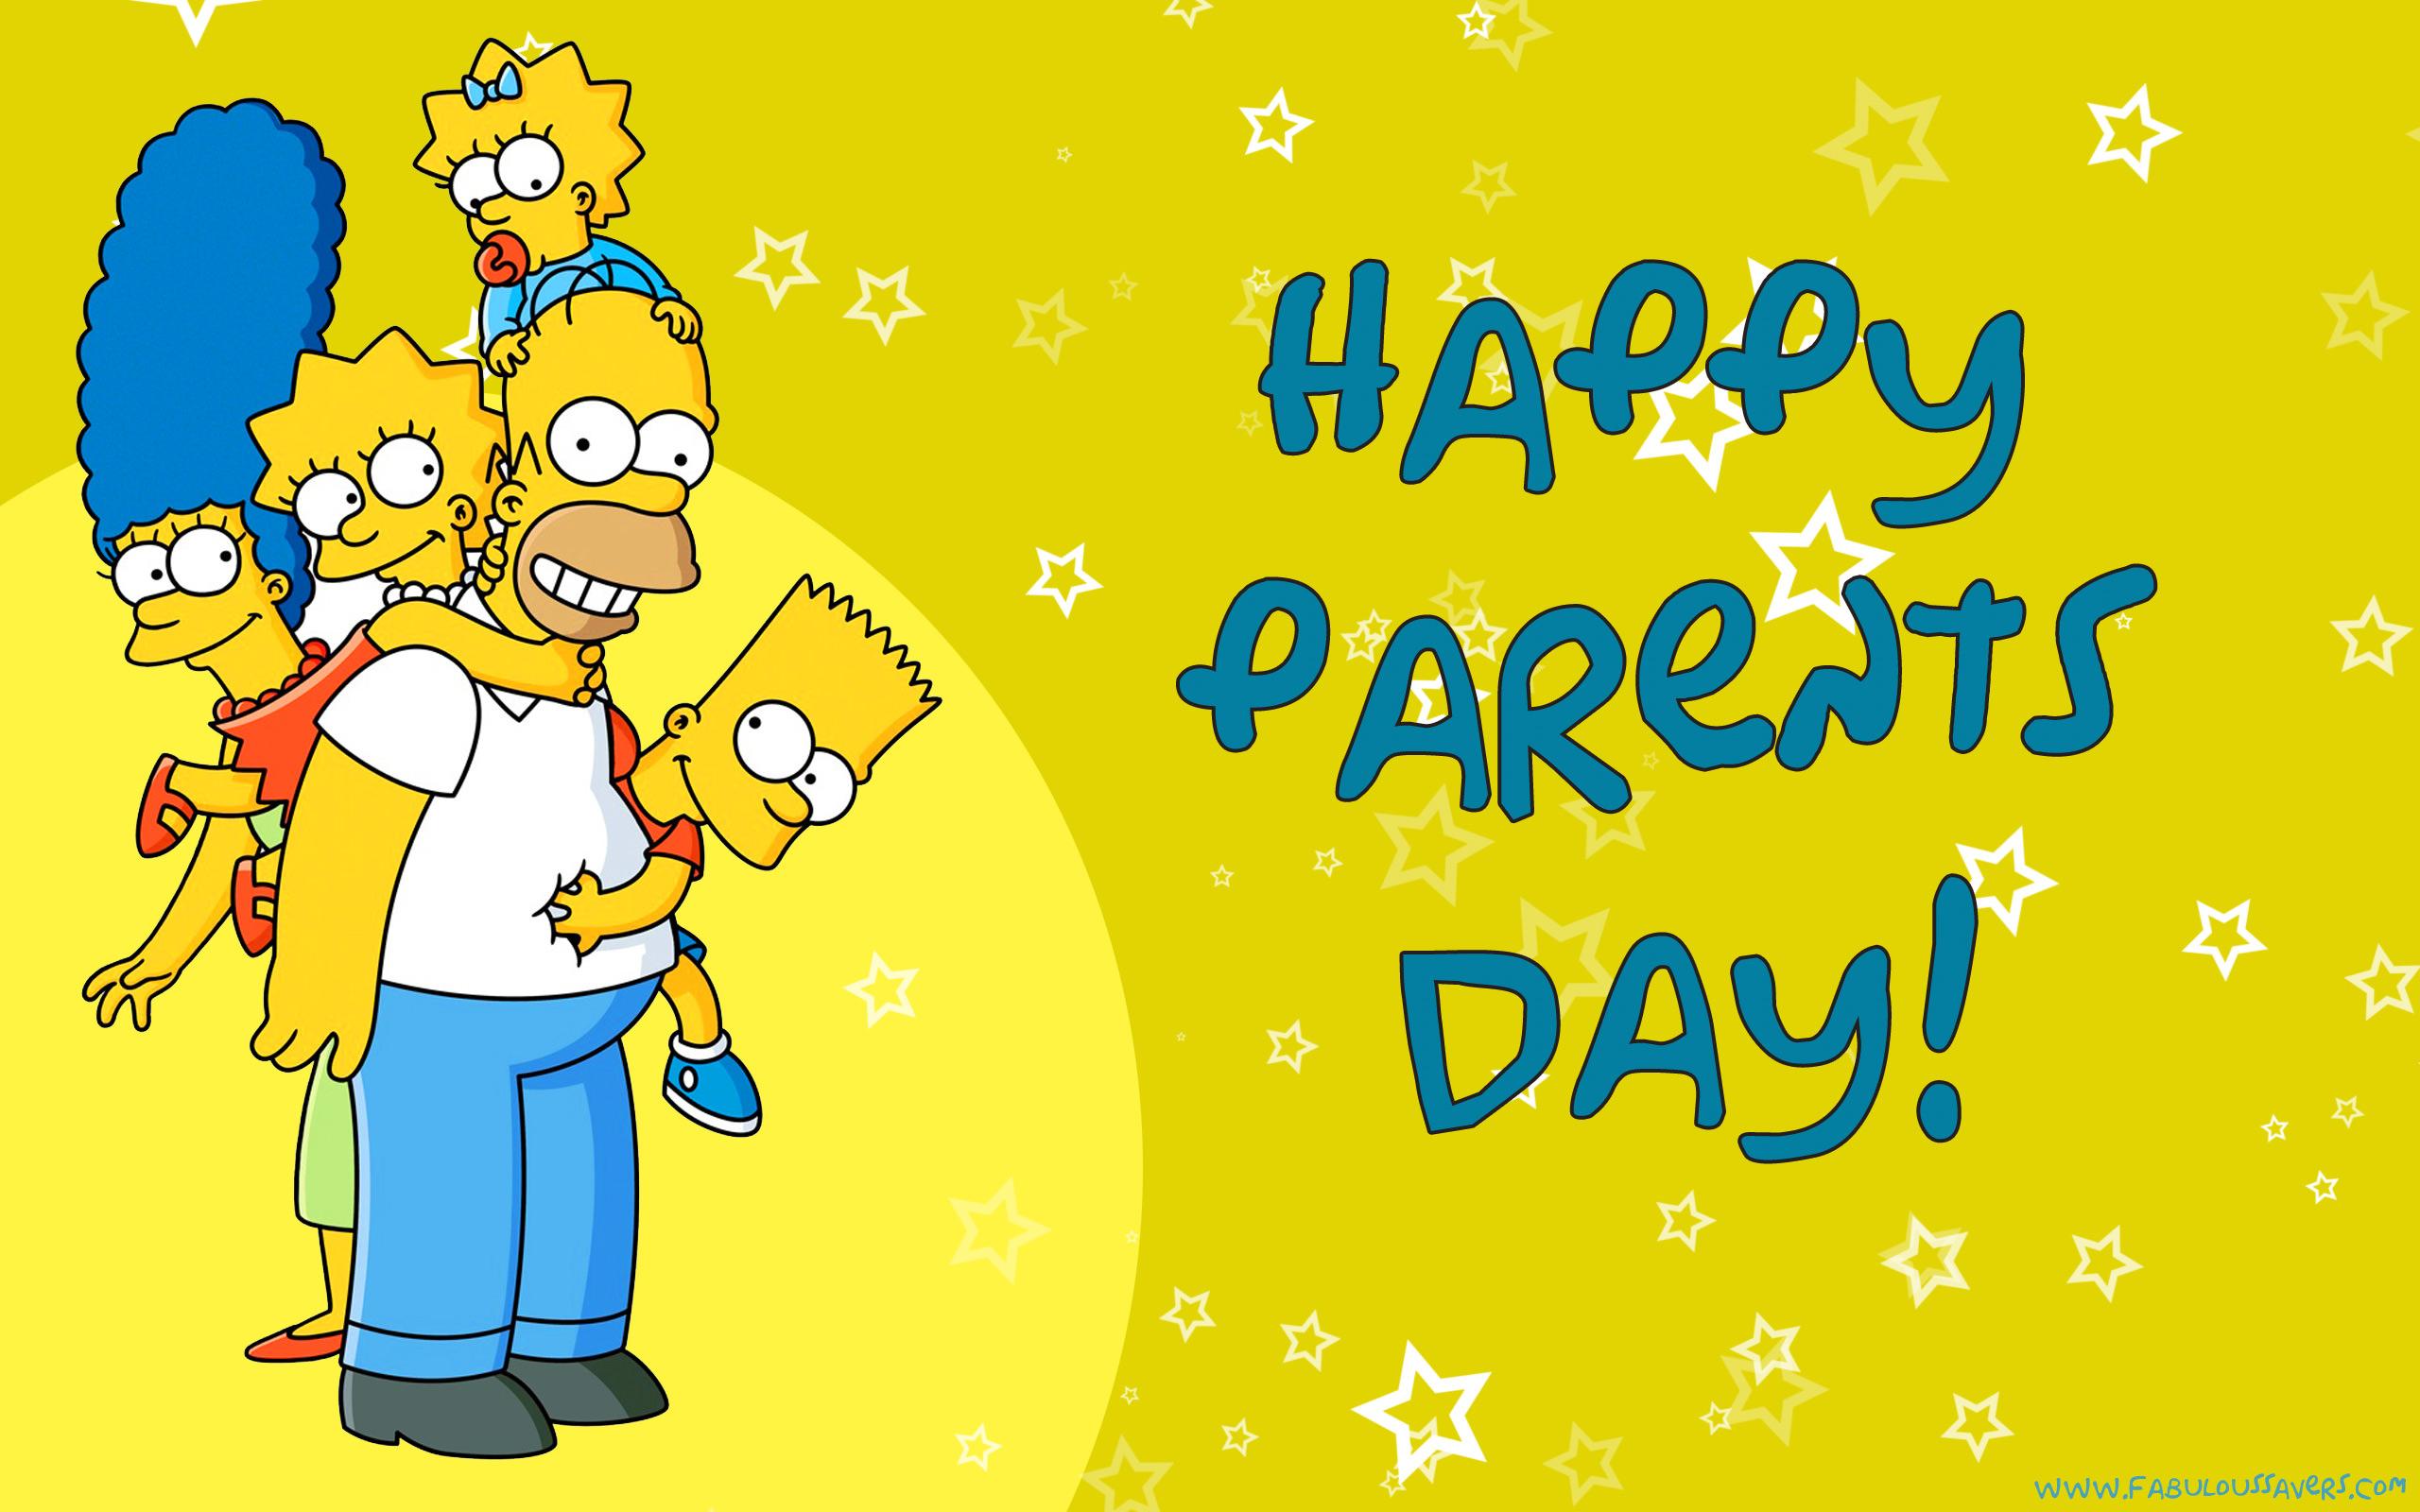 Happy Parents' Day wallpaper